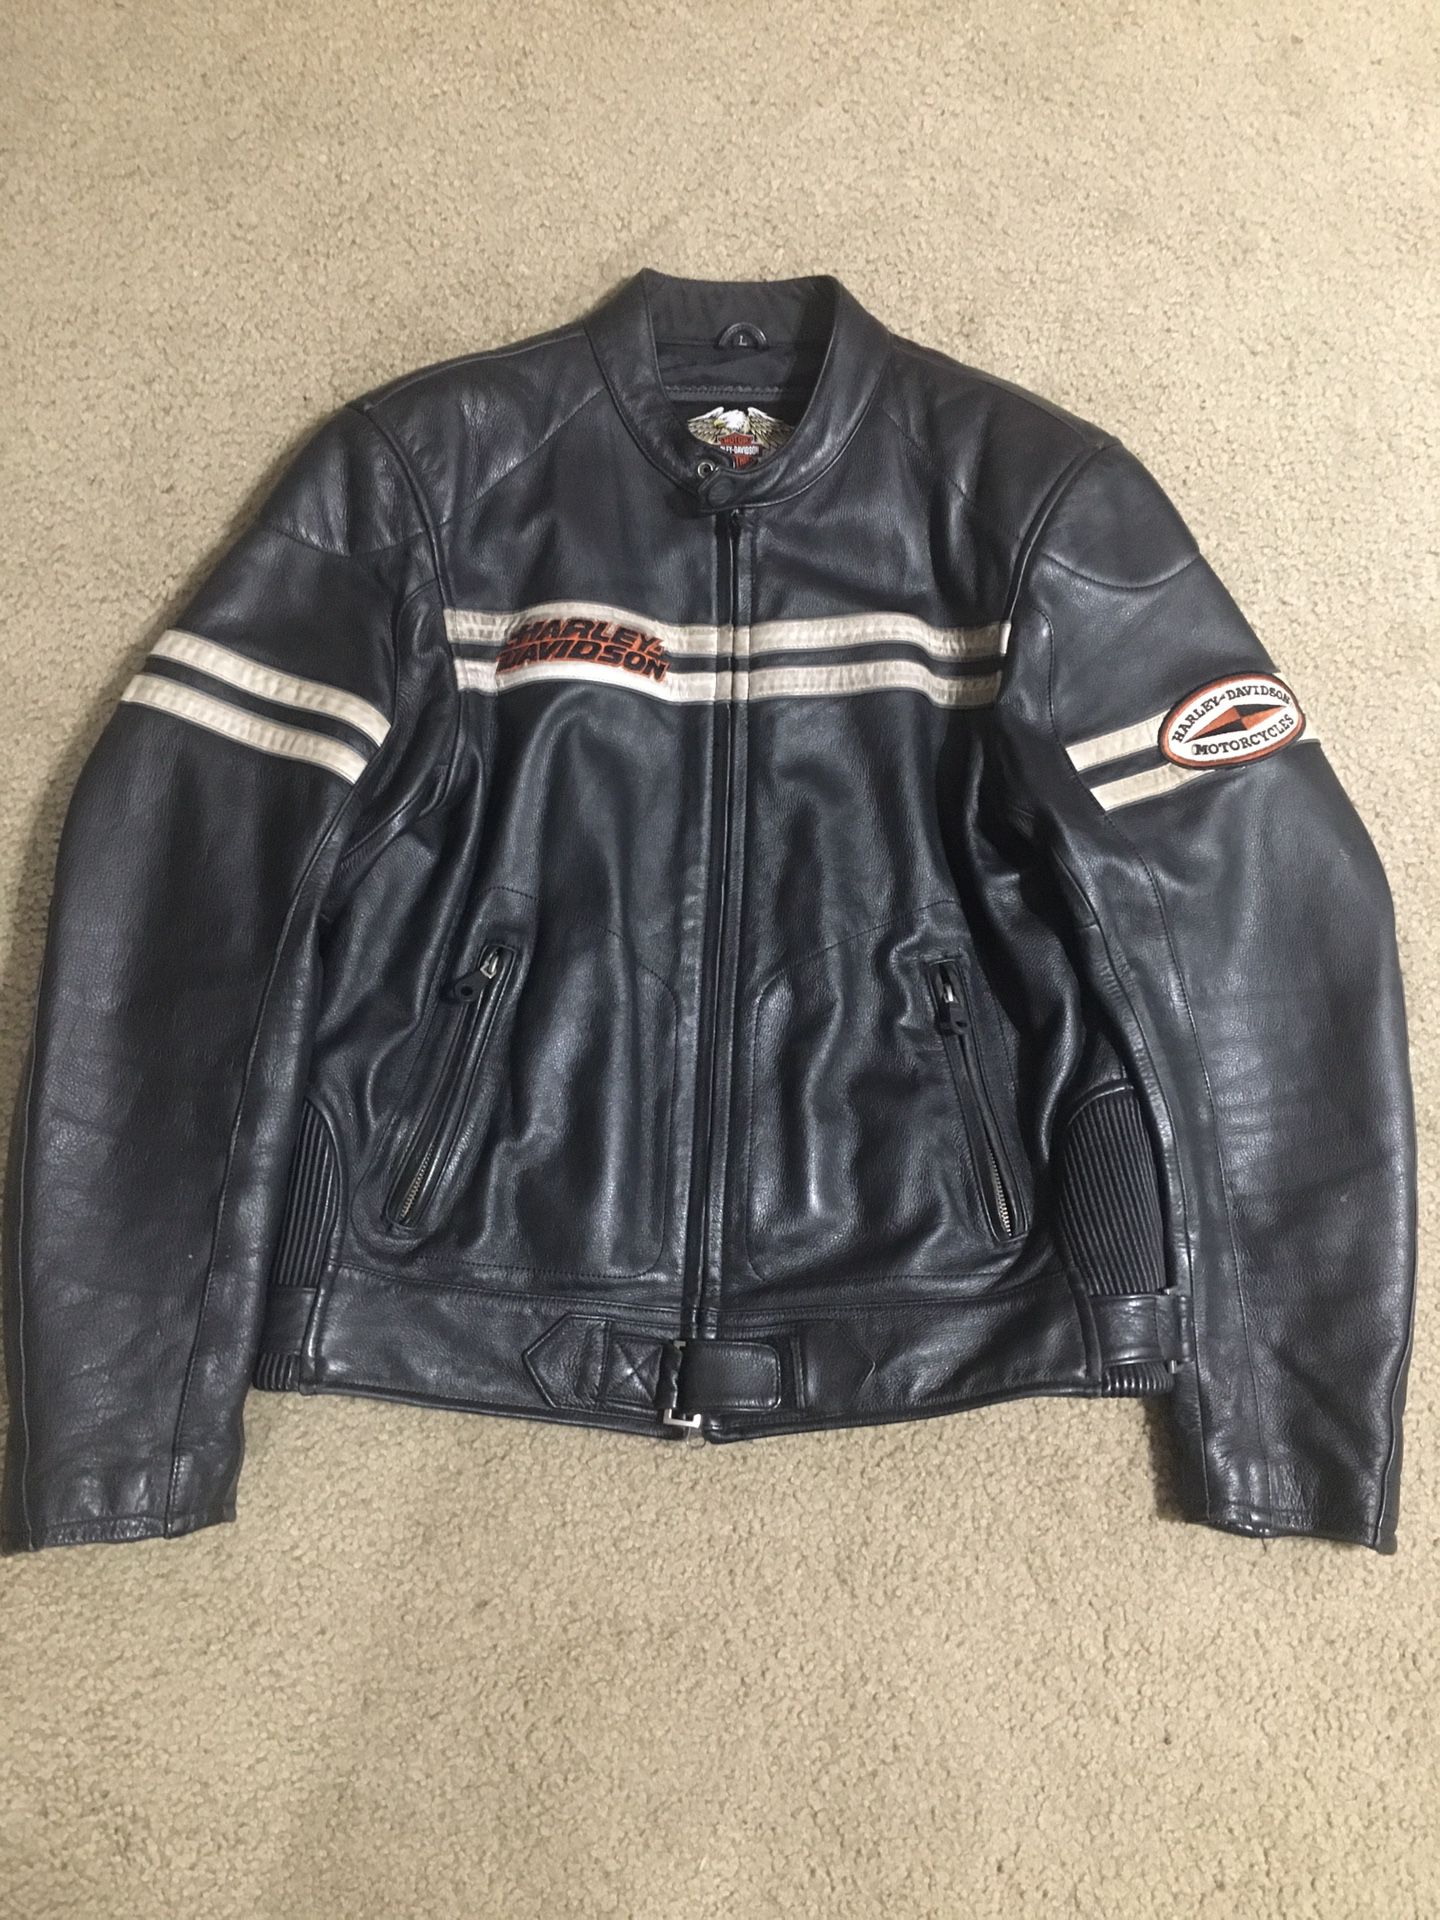 Harley Davidson motorcycle jacket